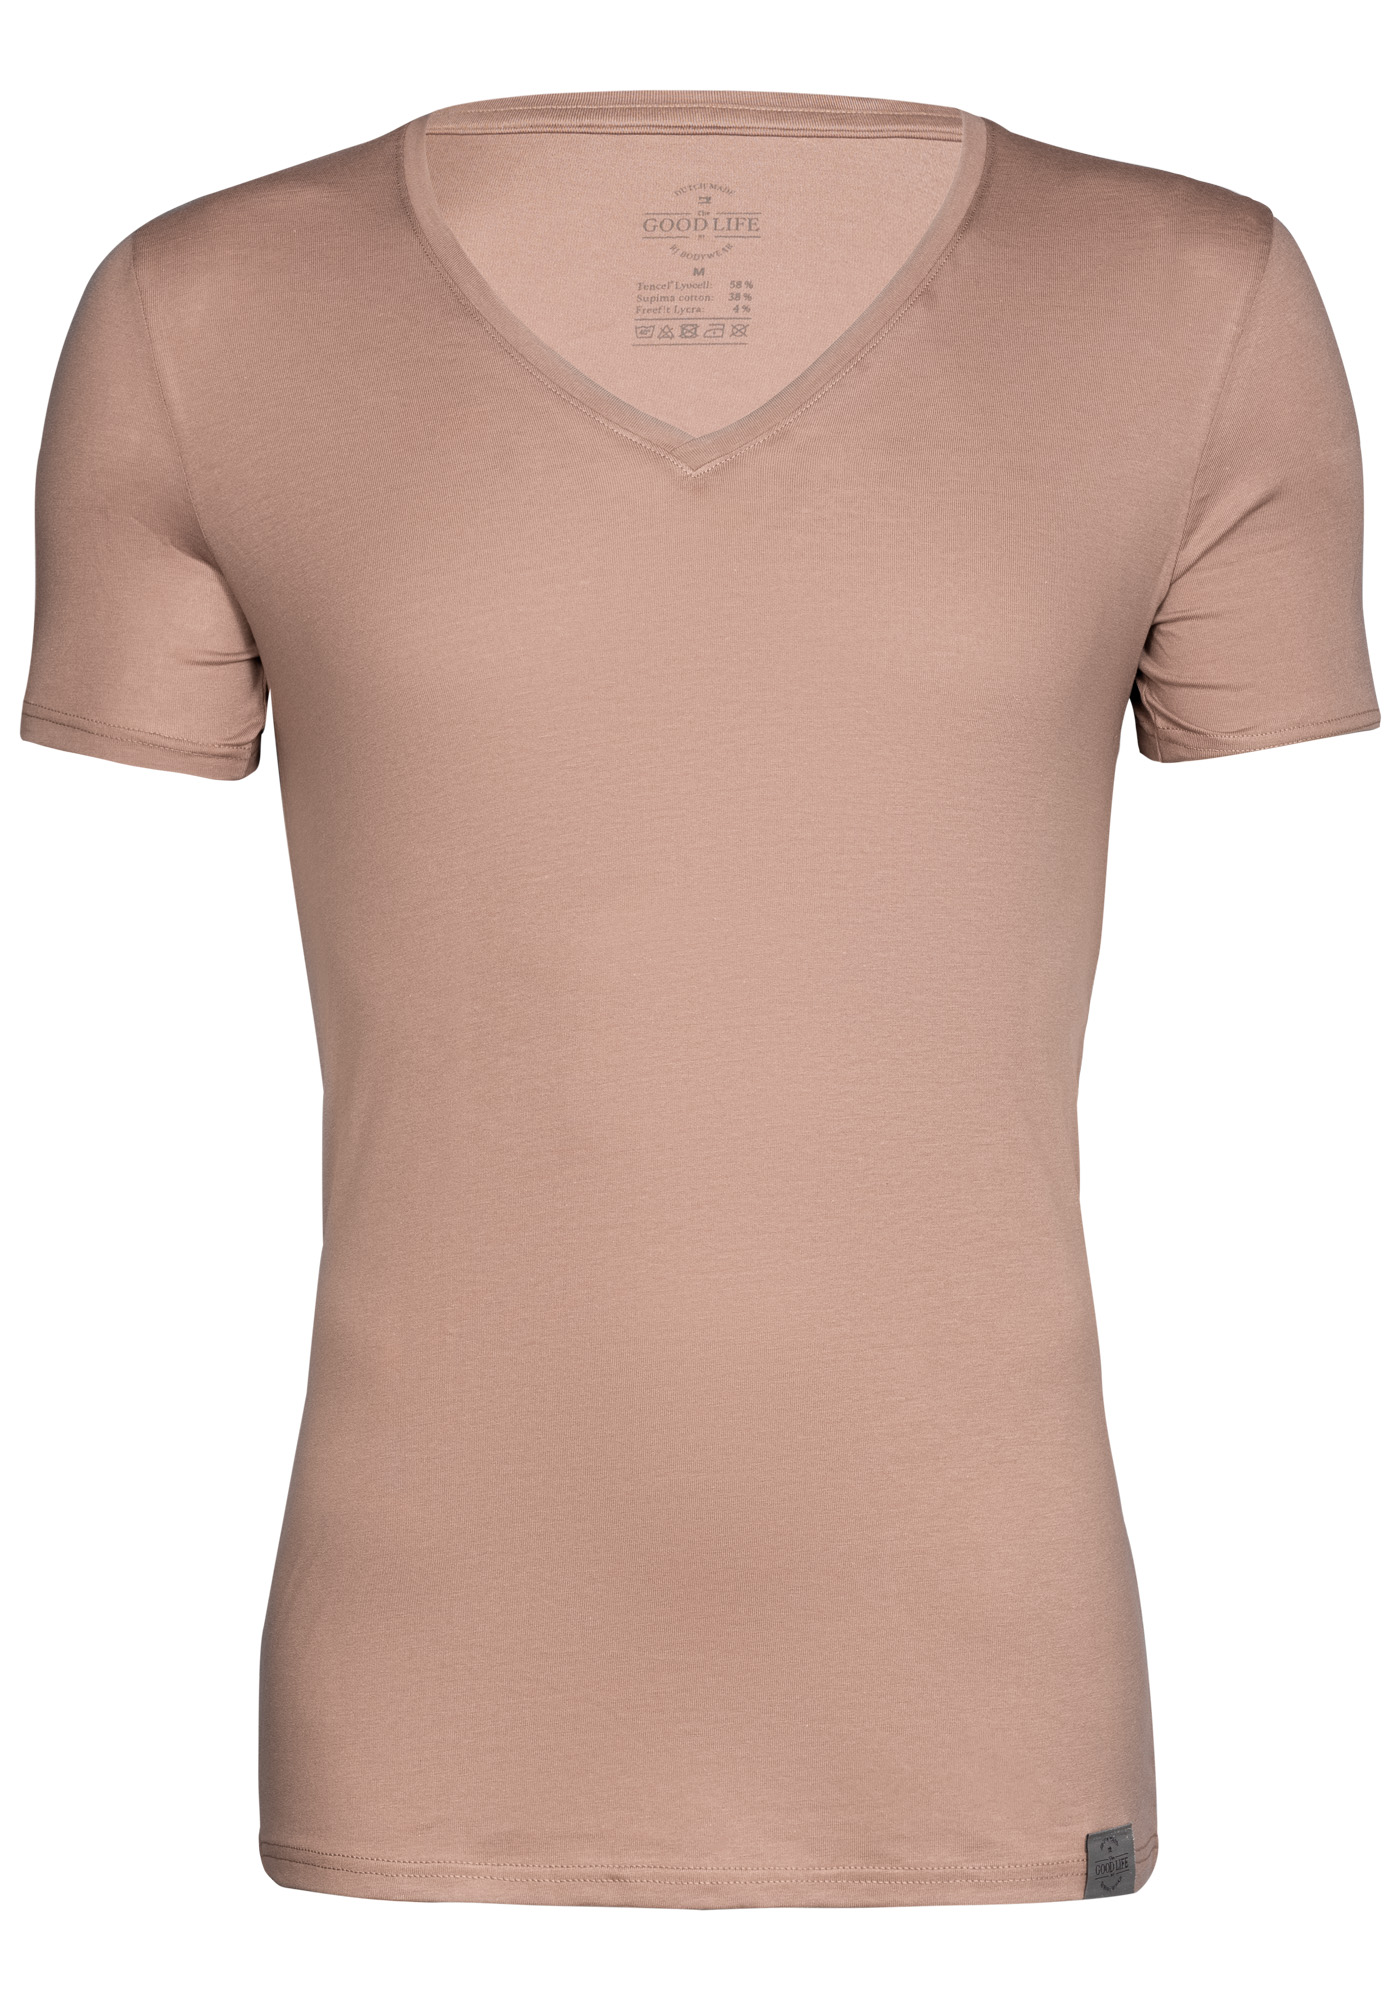 RJ Bodywear The Good Life T-shirts (2-pack), slim fit heren T-shirts diepe V-hals, huidskleur